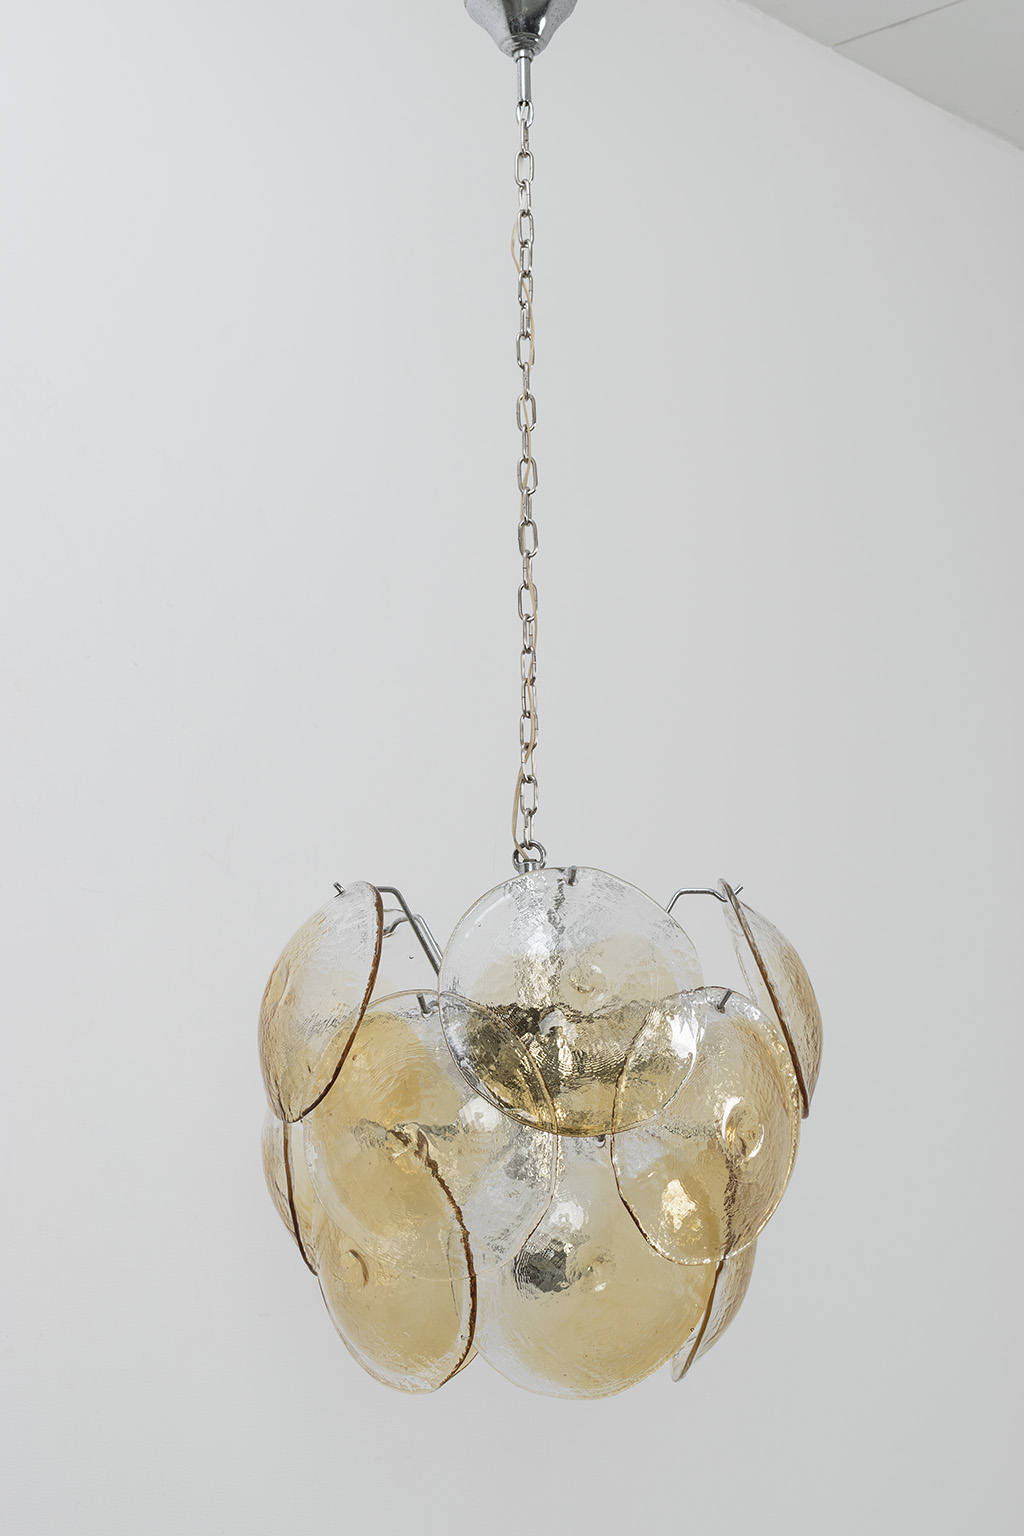 Hanglamp met Murano glas